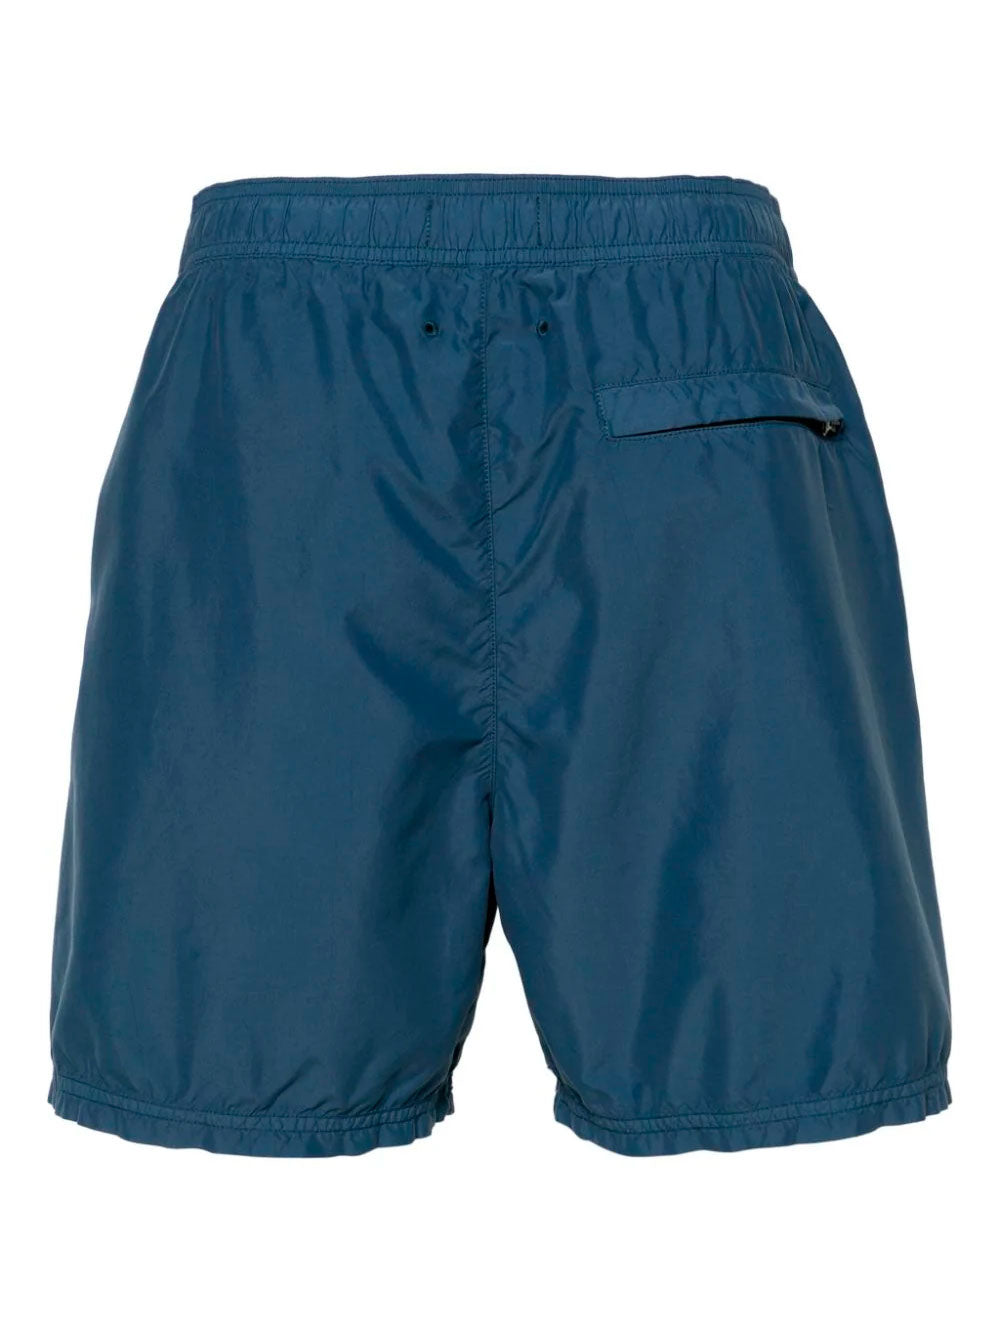 Compass-patch swim shorts